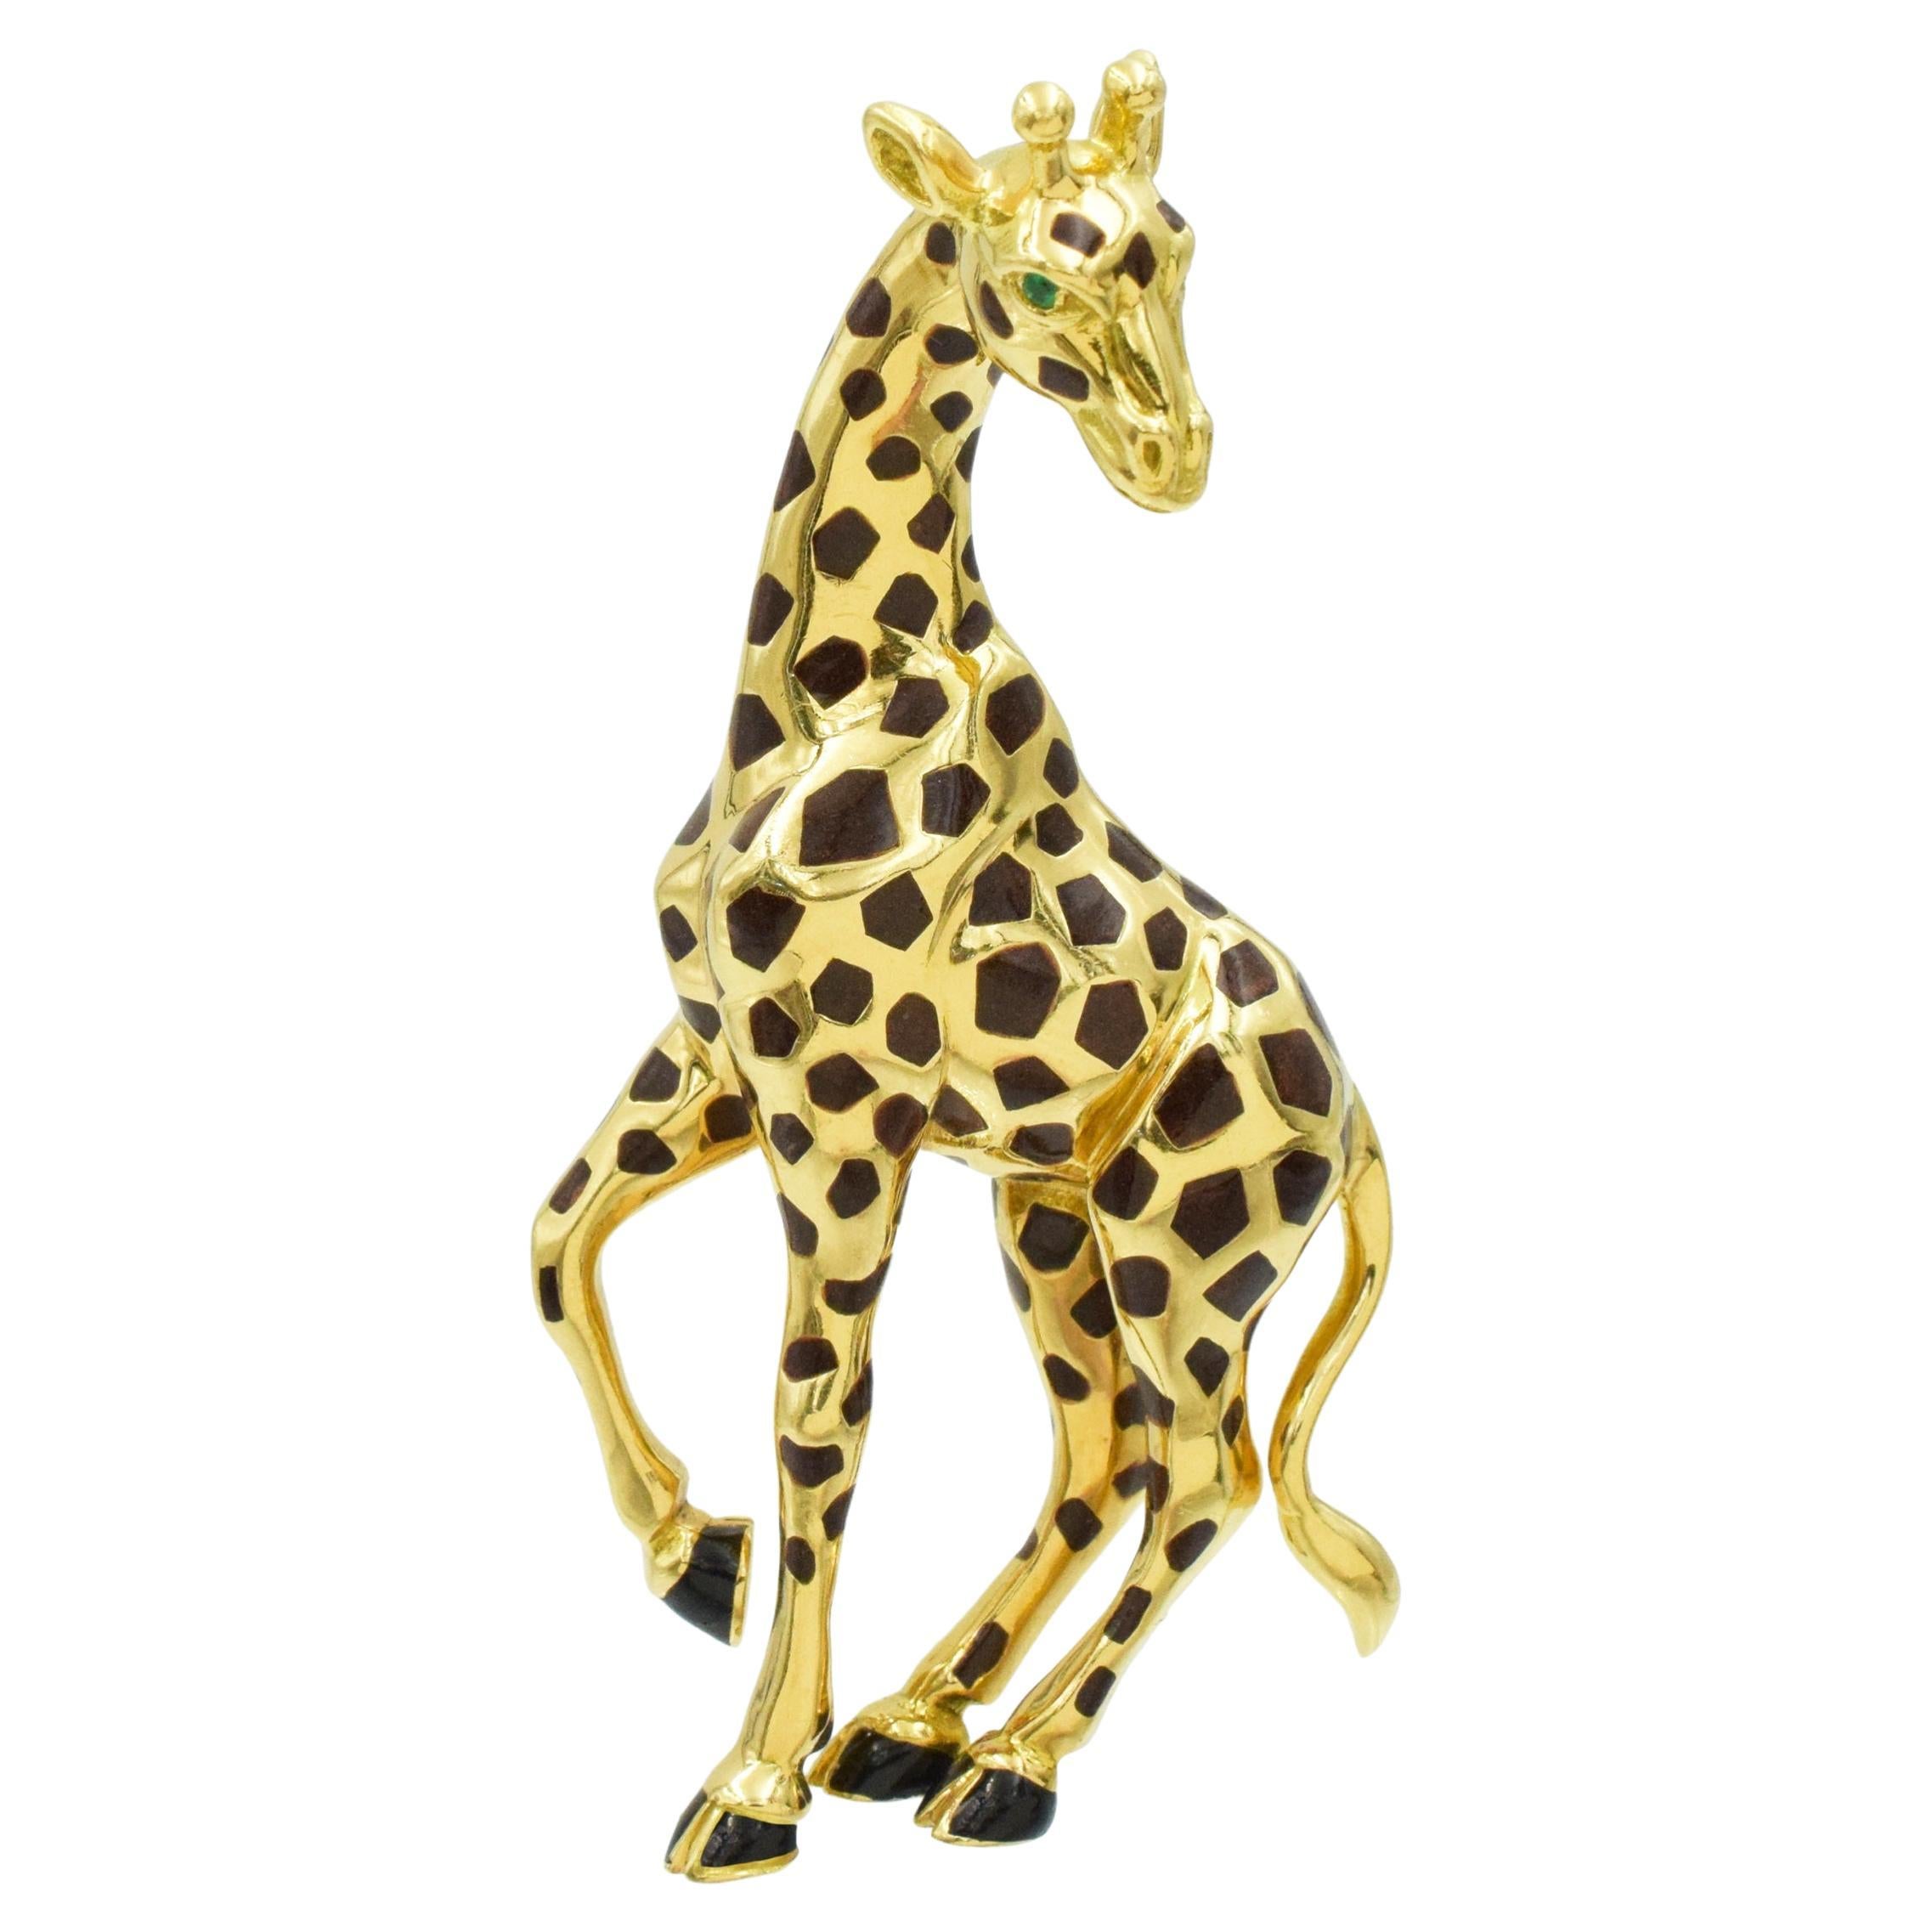 Cartier "Giraffe" Brooch in 18k Yellow Gold For Sale